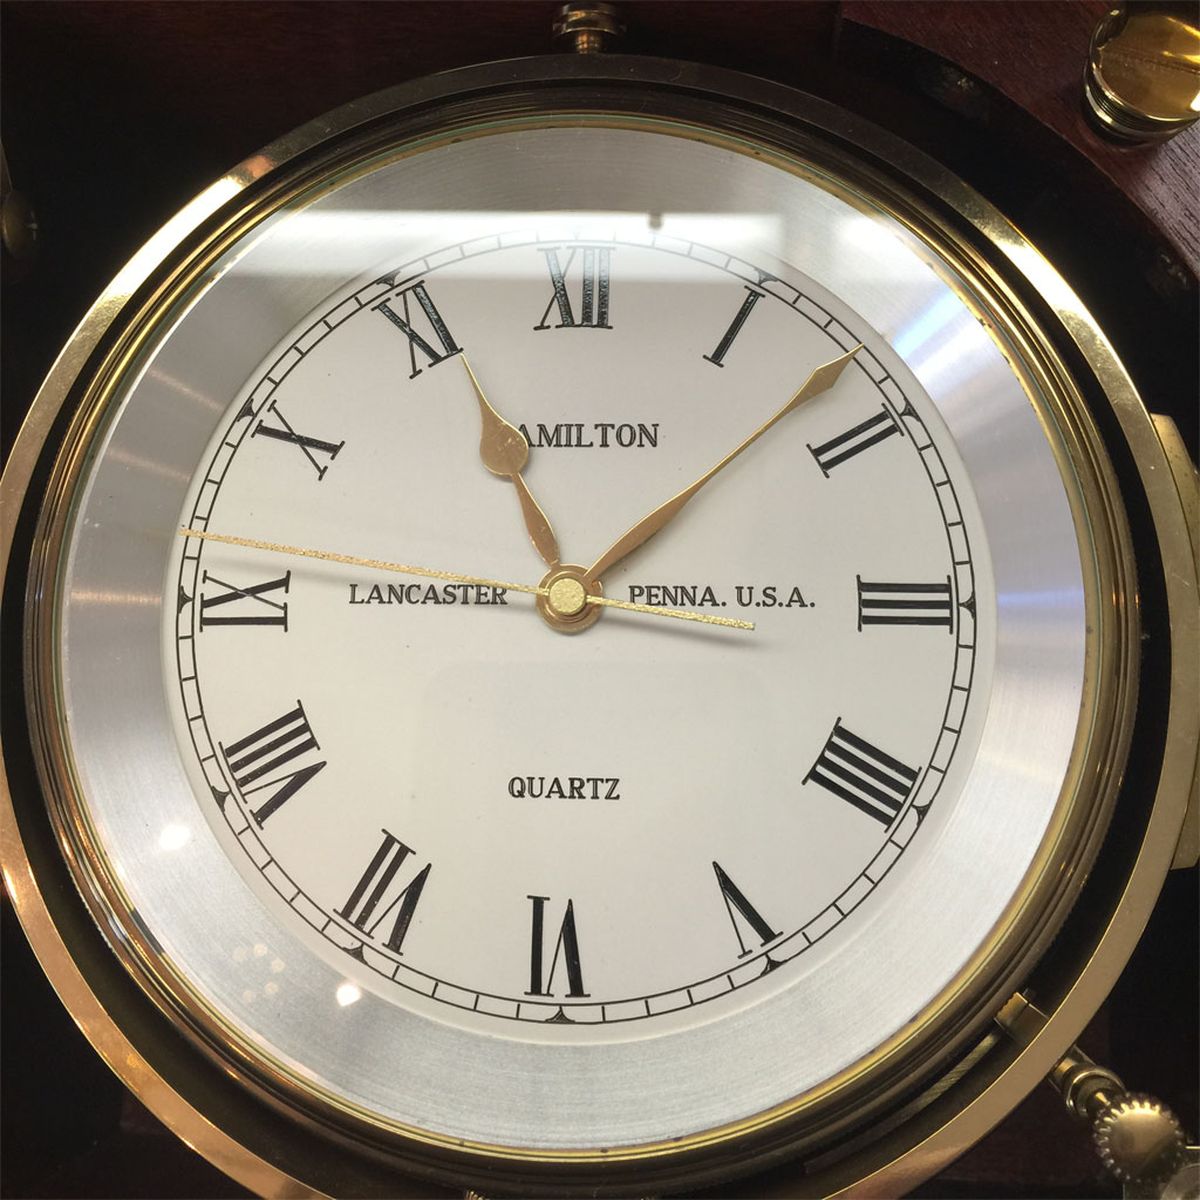 Hamilton Watches Repair, Maintenance & Sales